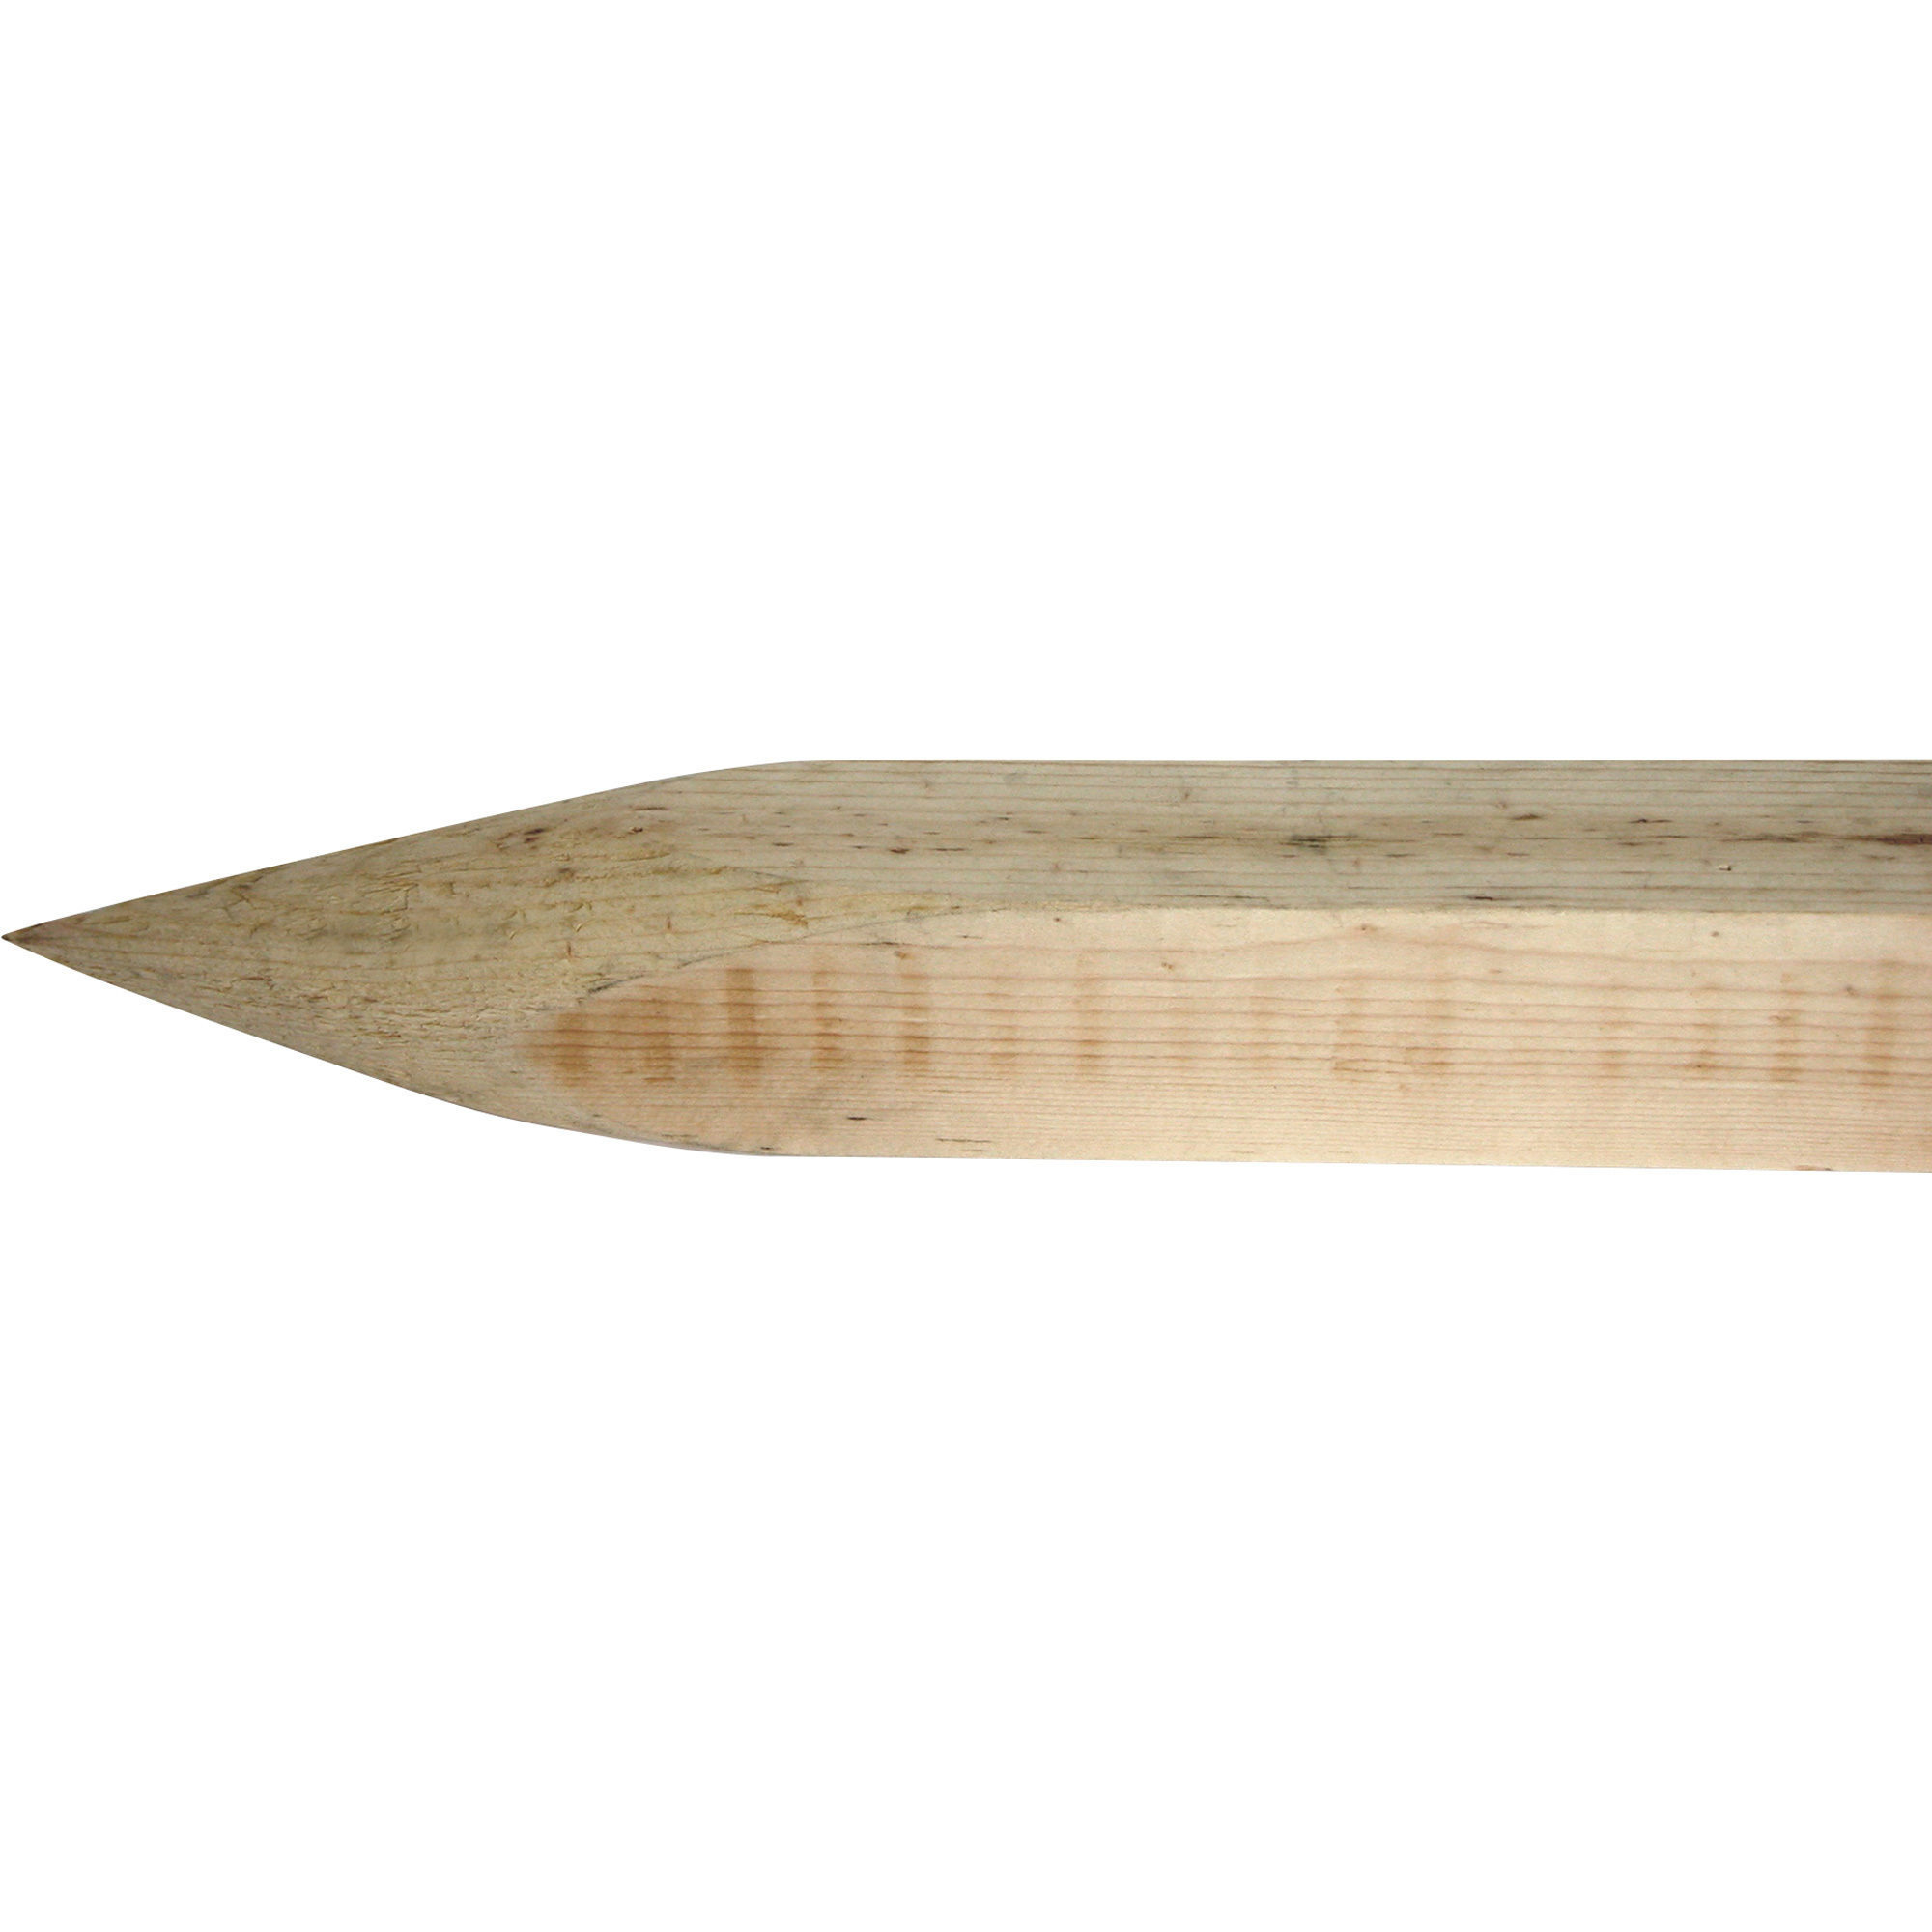 Lumberjack Tools Staking Tool â 15Â° Tool, 2Inch Stock, Model ST2000